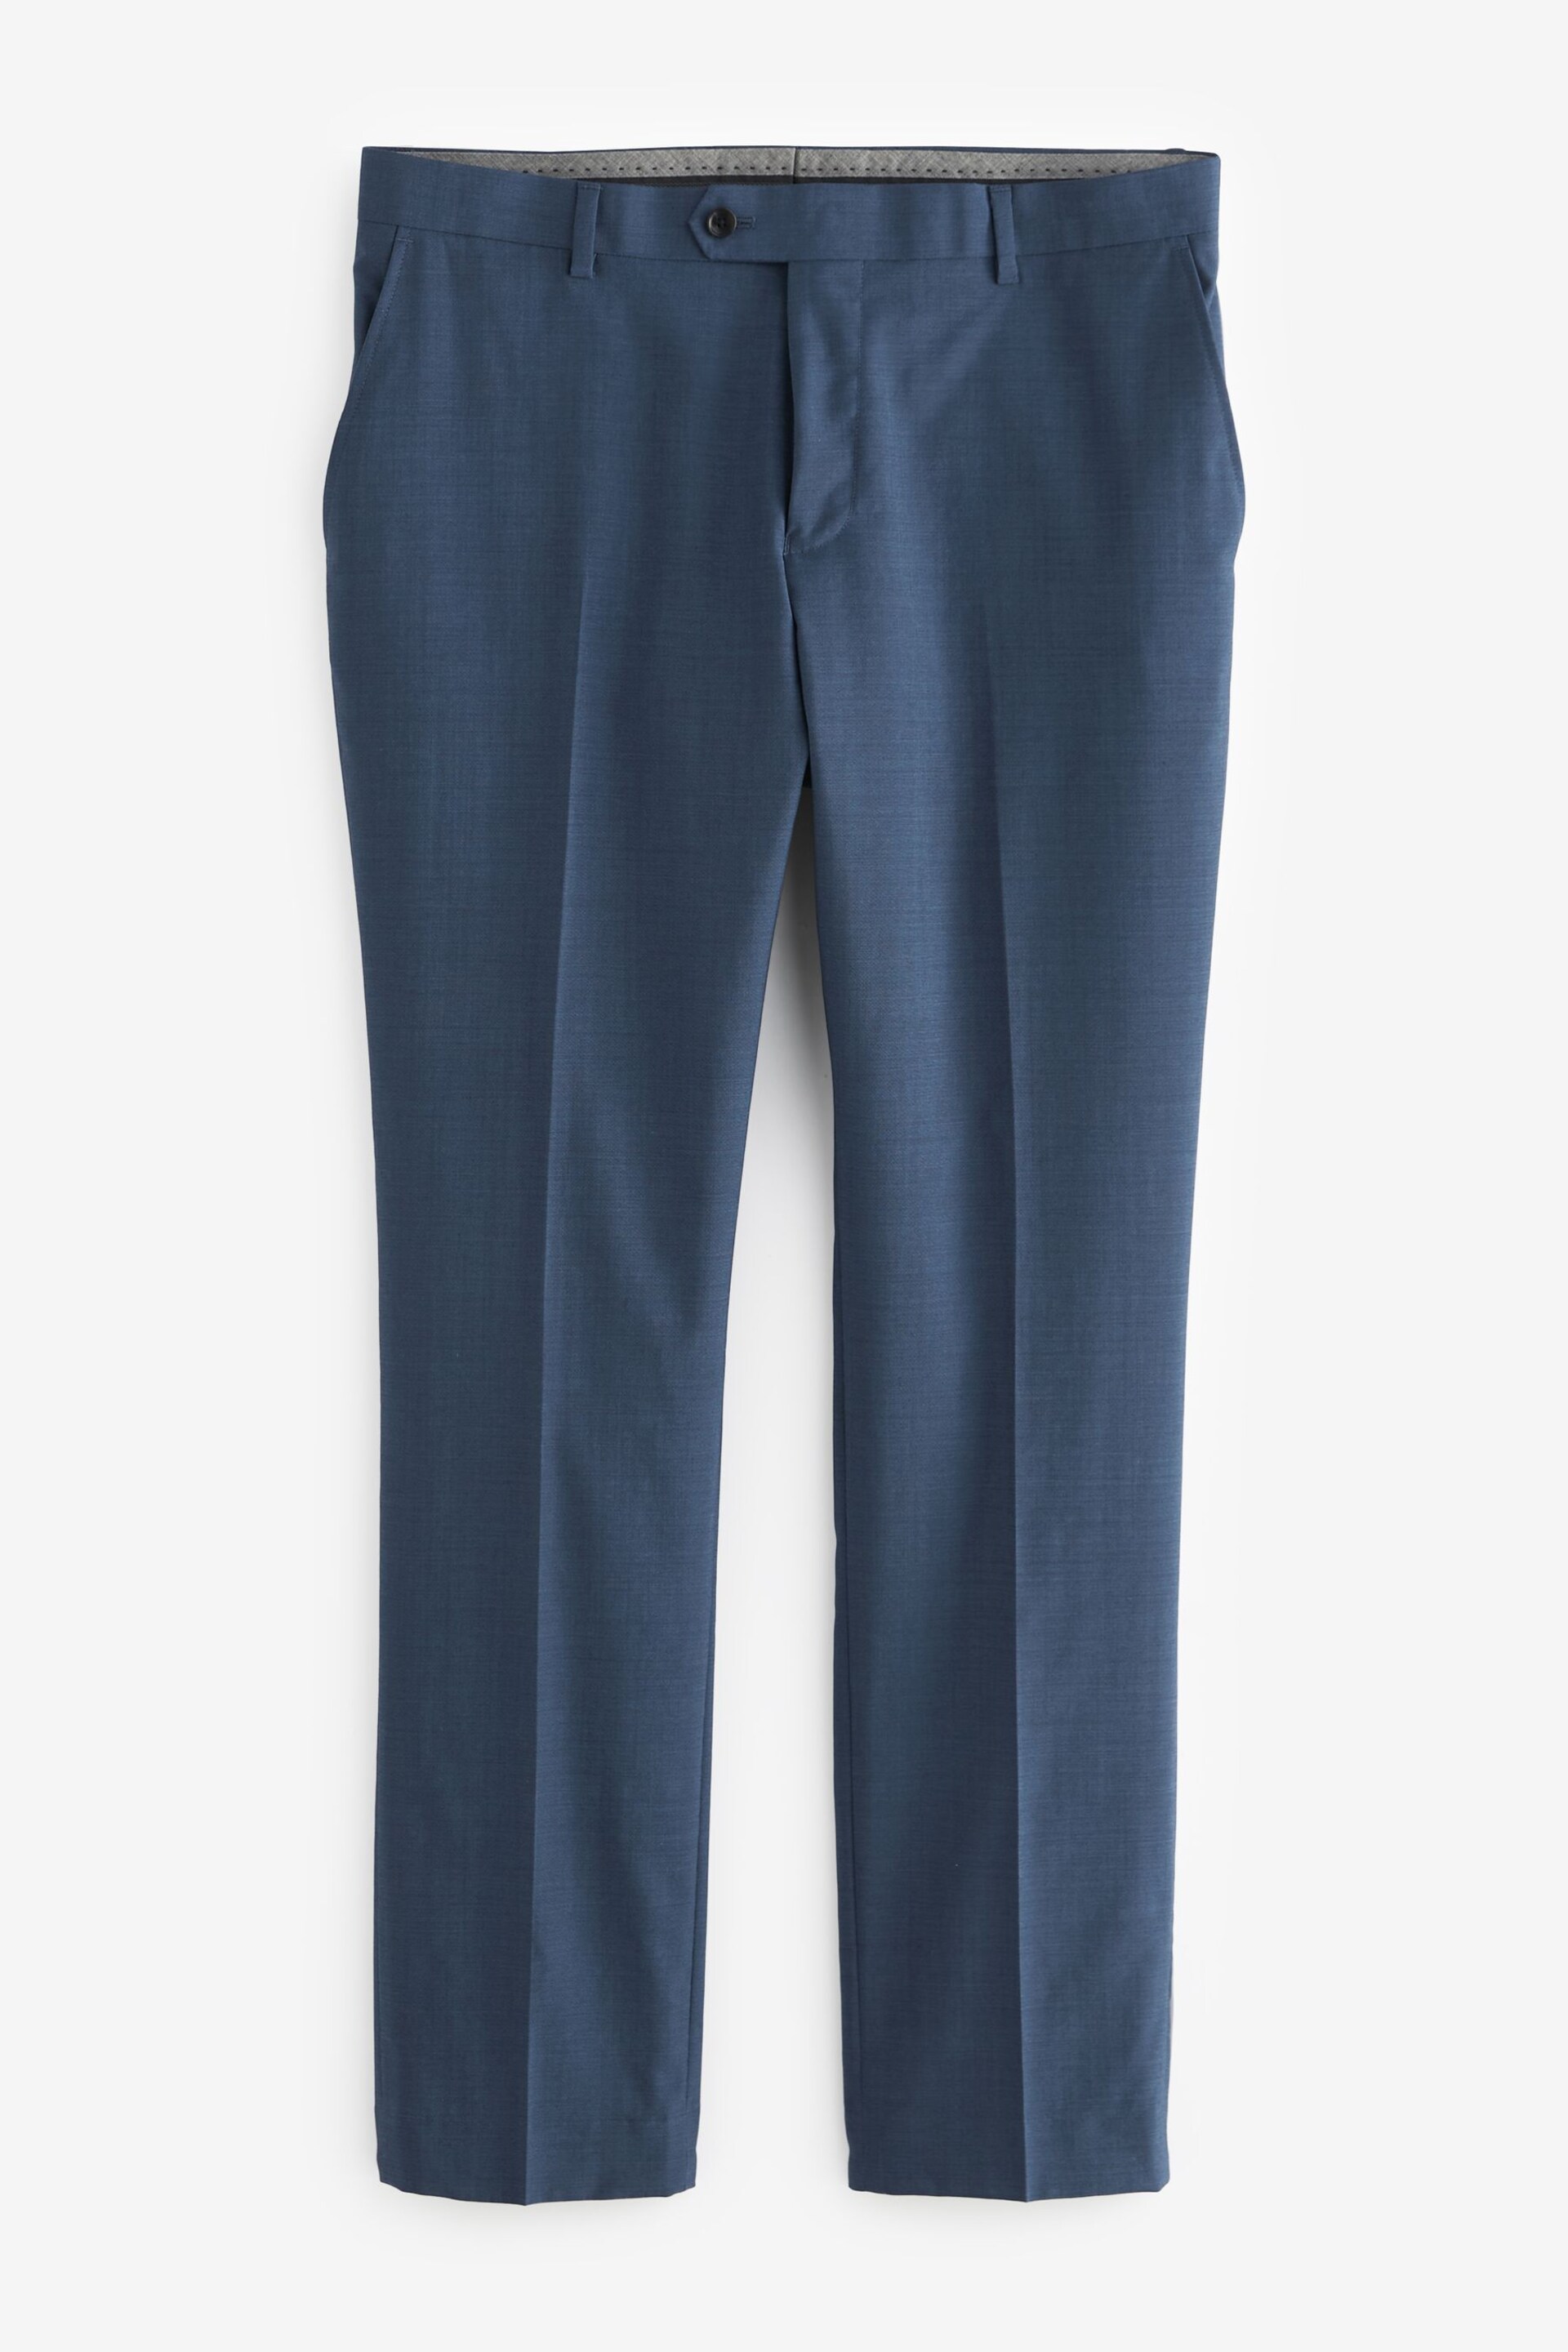 Light Blue Light Blue Slim Fit Signature Tollegno Wool Plain Suit Trousers - Image 1 of 4